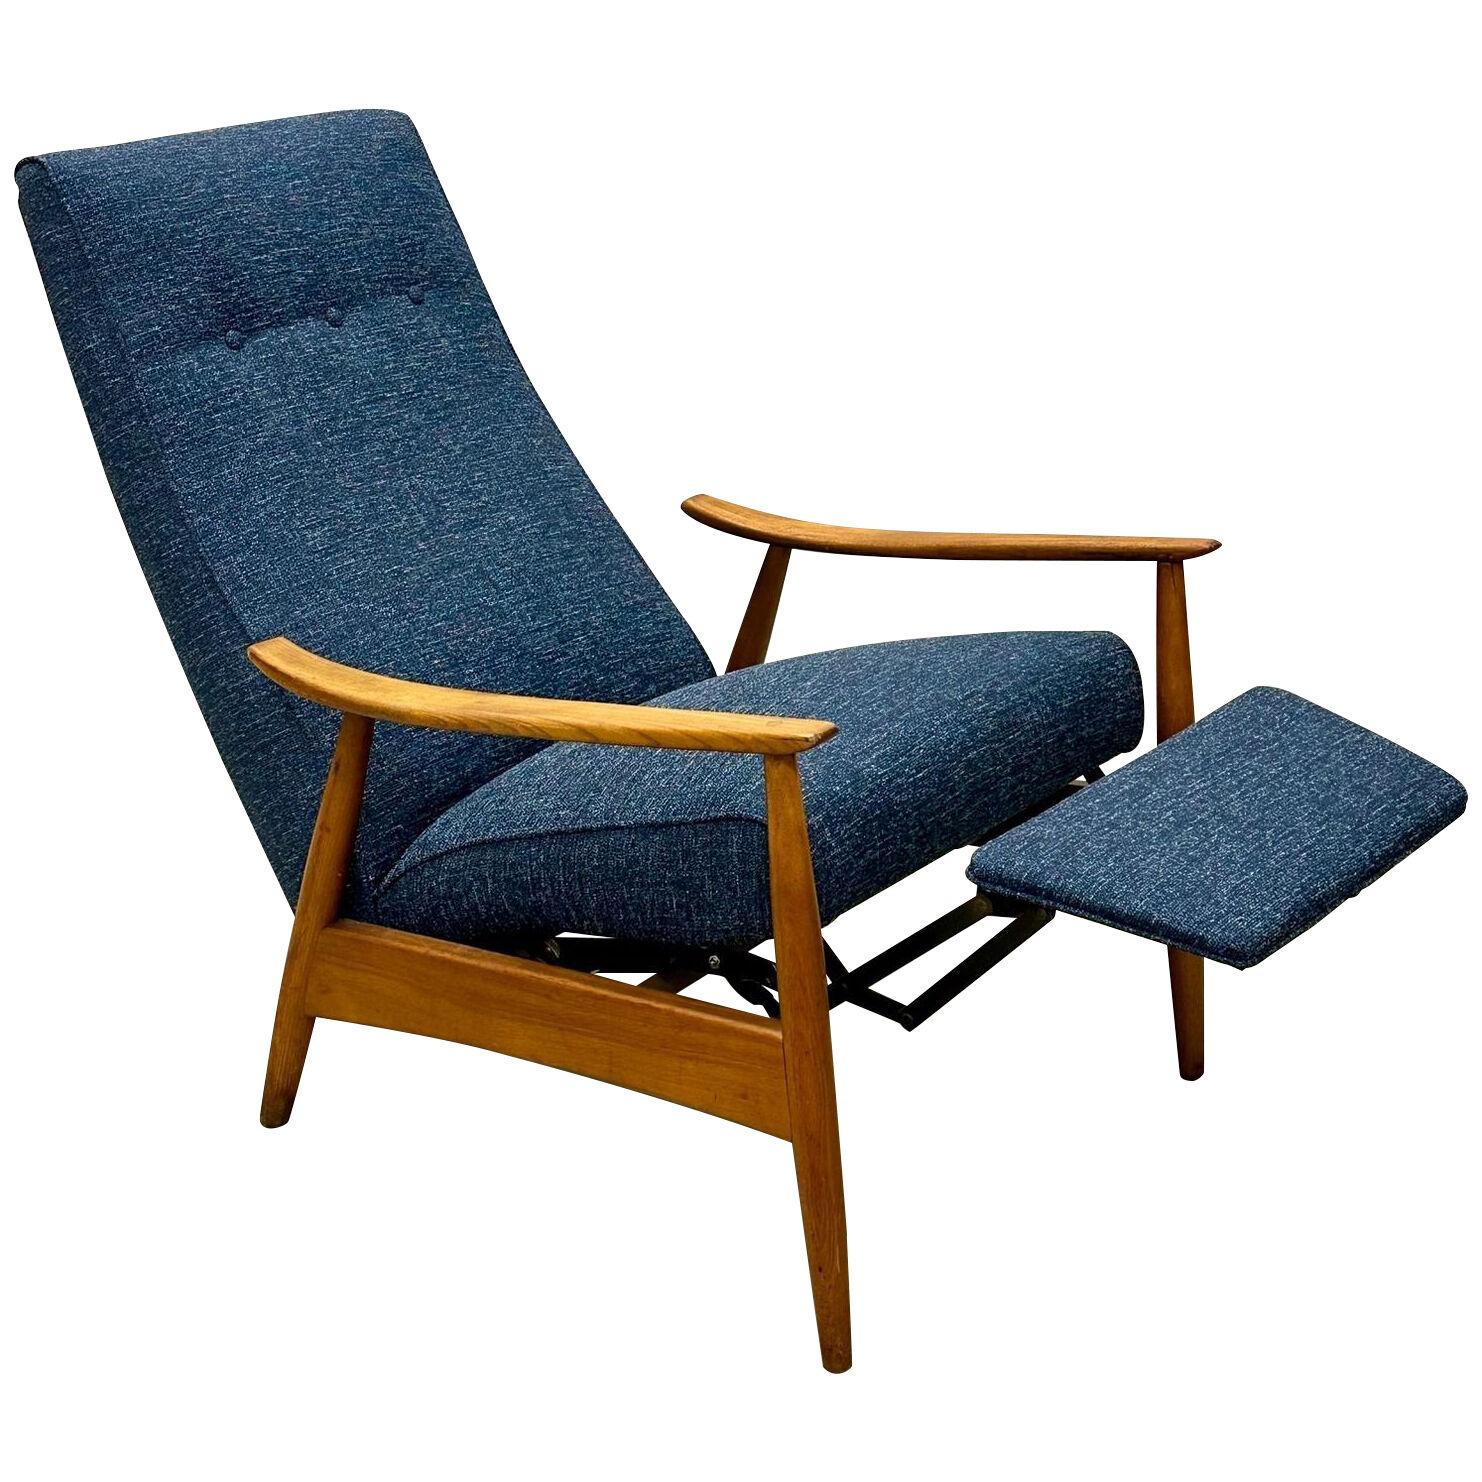 Mid-Century Modern Reclining Lounge Chair by Milo Baughman, Thayer Coggin, 1950s